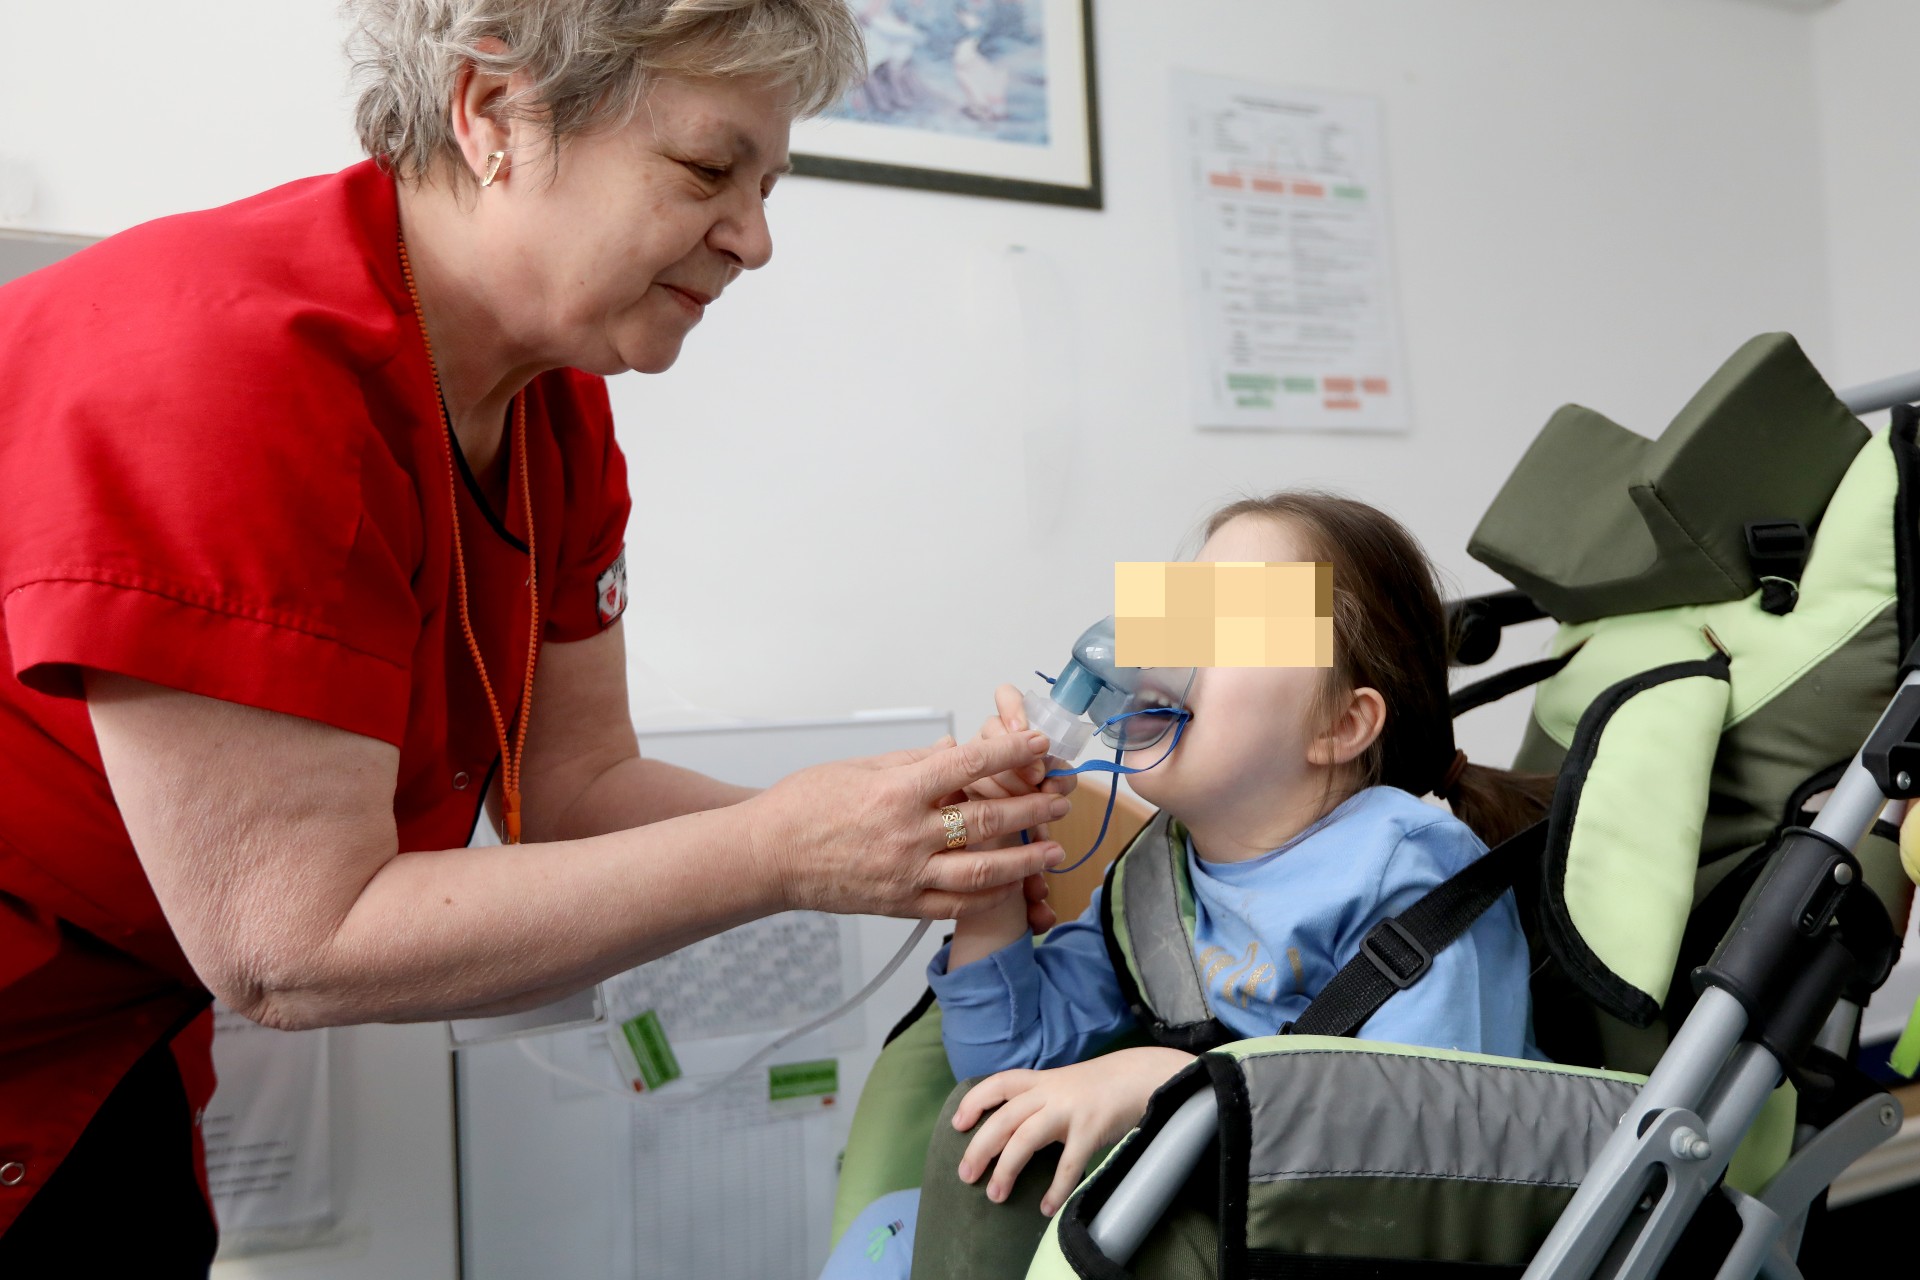 https://www.europafm.ro/wp-content/uploads/2019/12/Insgrijire-paliativa-pentru-copii-Hospice-Casa-Sperantei.jpg